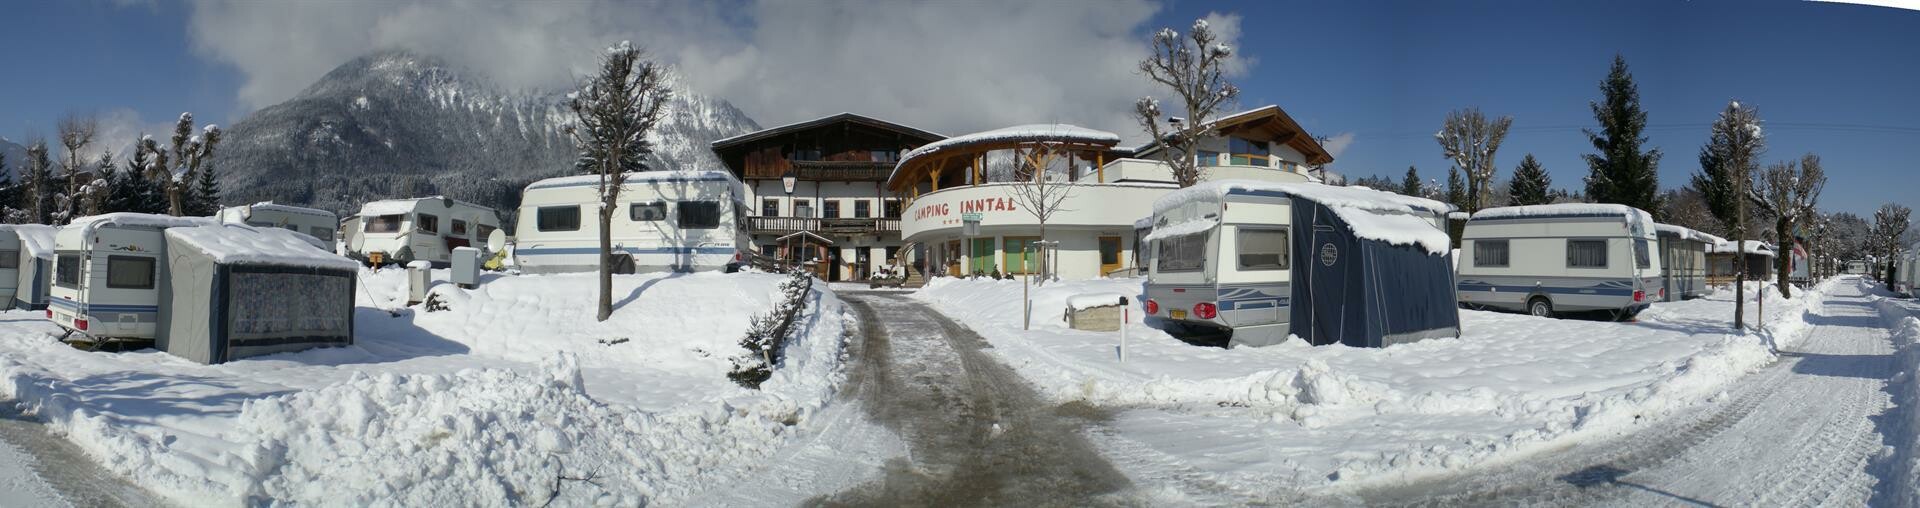 Camping-Inntal-Winterpanorama.jpg